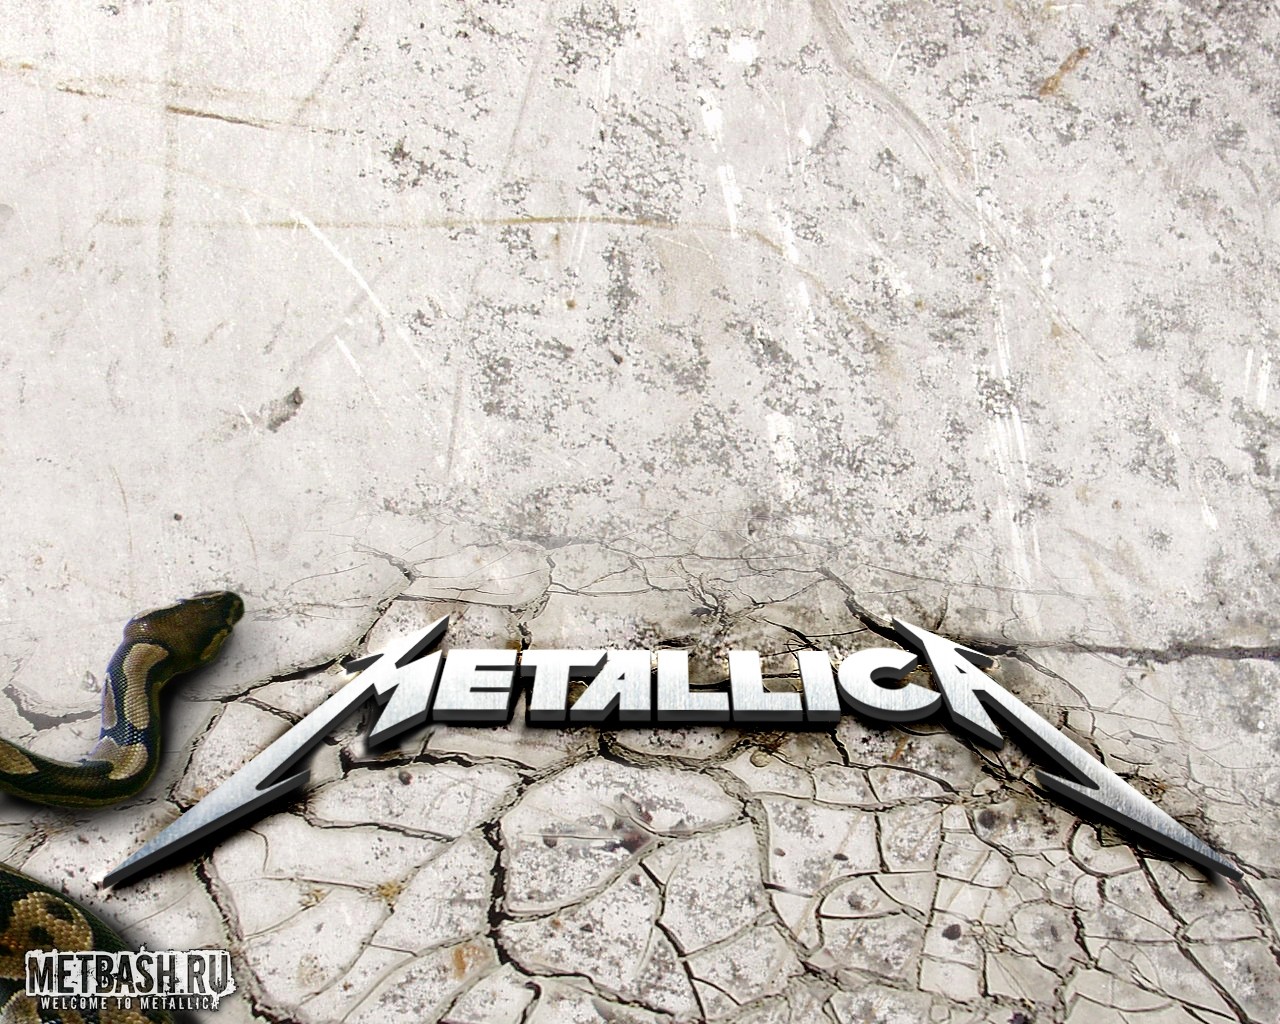 General 1280x1024 Metallica heavy metal thrash metal band logo Big 4 music